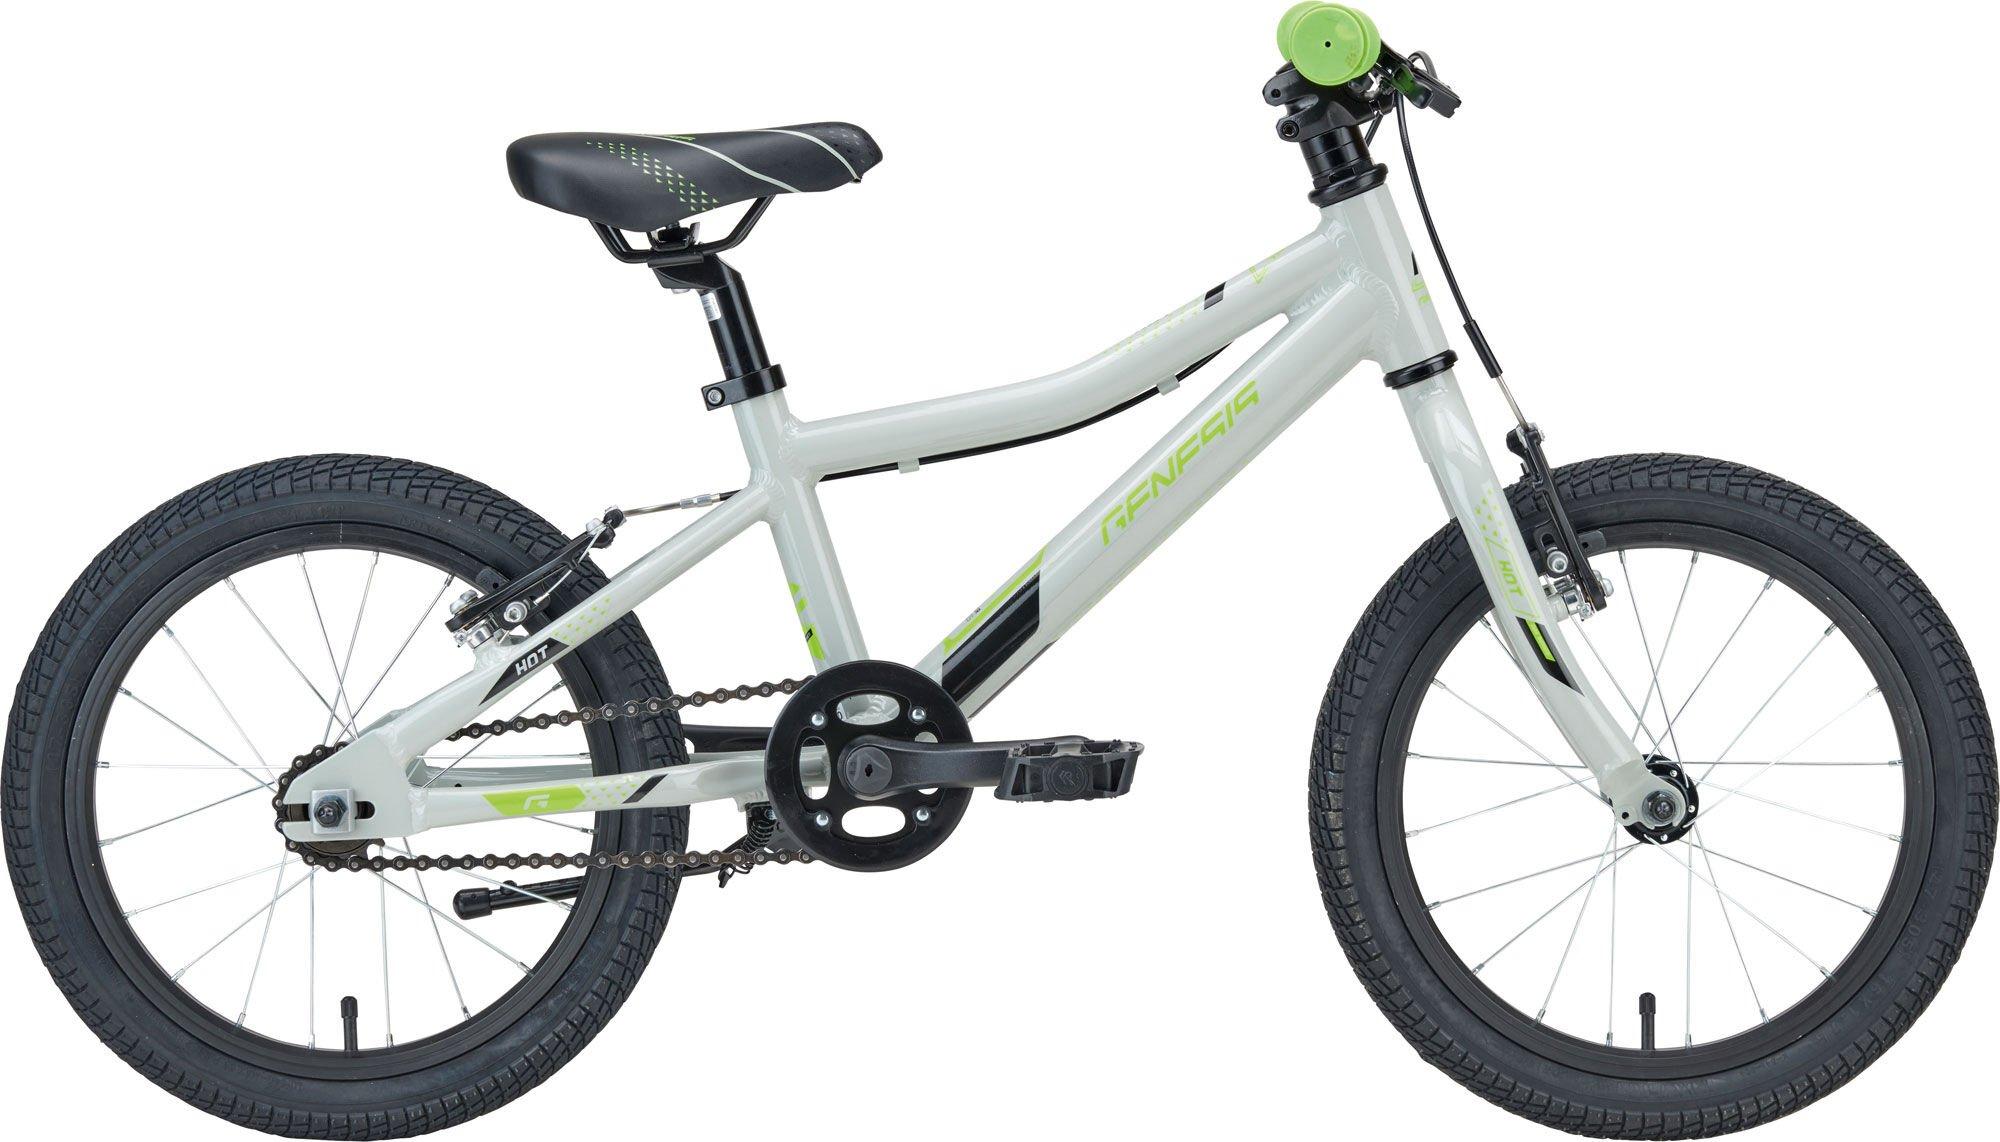 Detský bicykel Genesis Hot 16 Kids Veľkosť: 16 inch. wheel